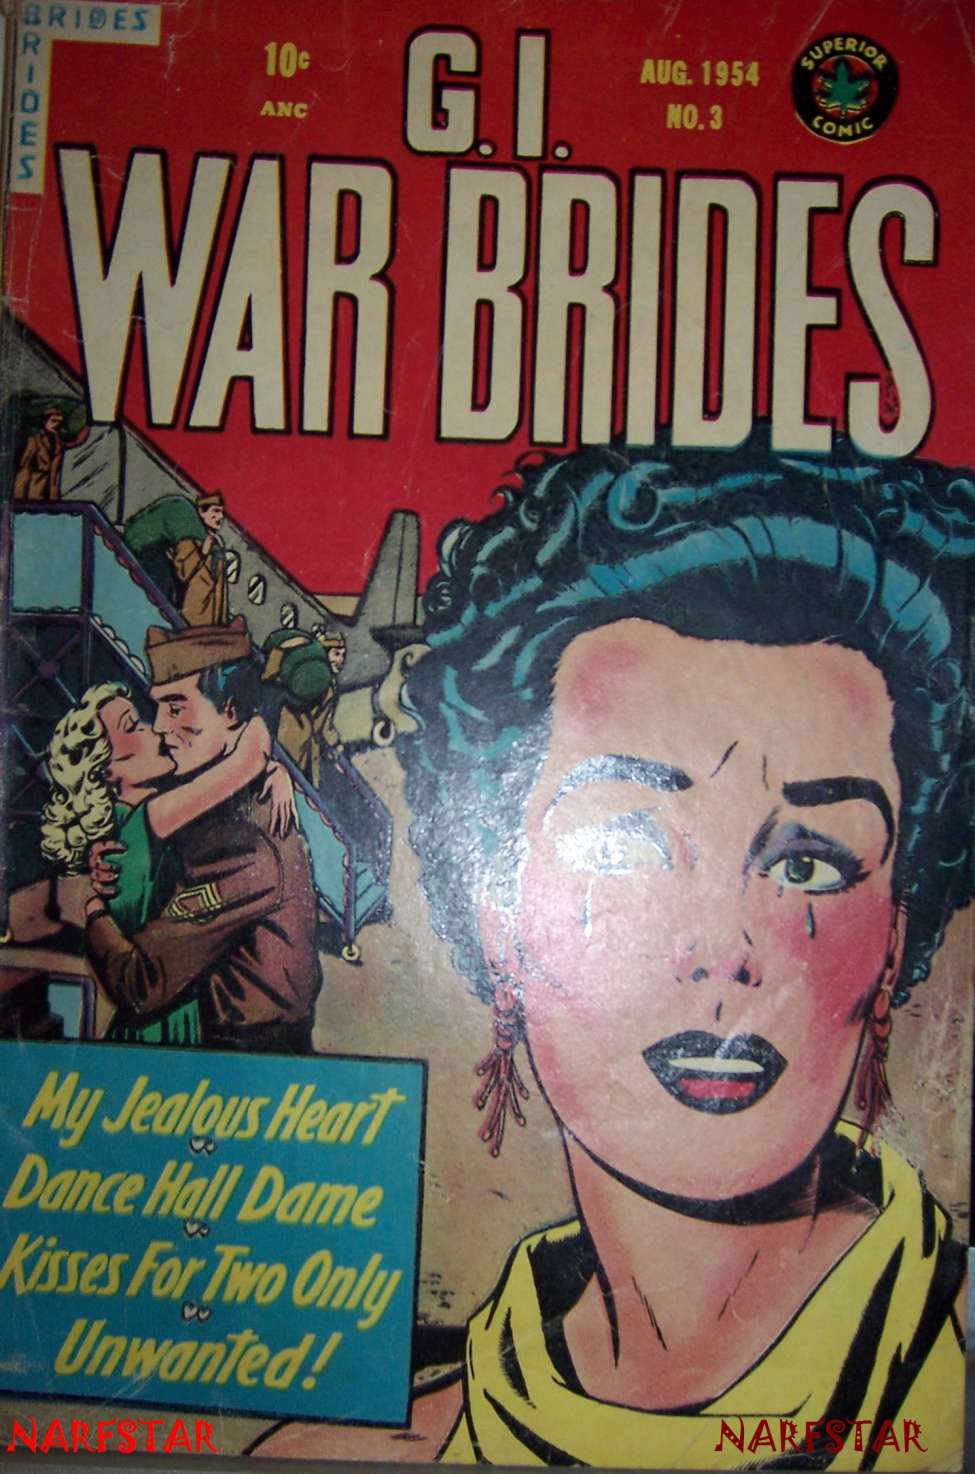 Comic Book Cover For G.I. War Brides 3 (digital camera)